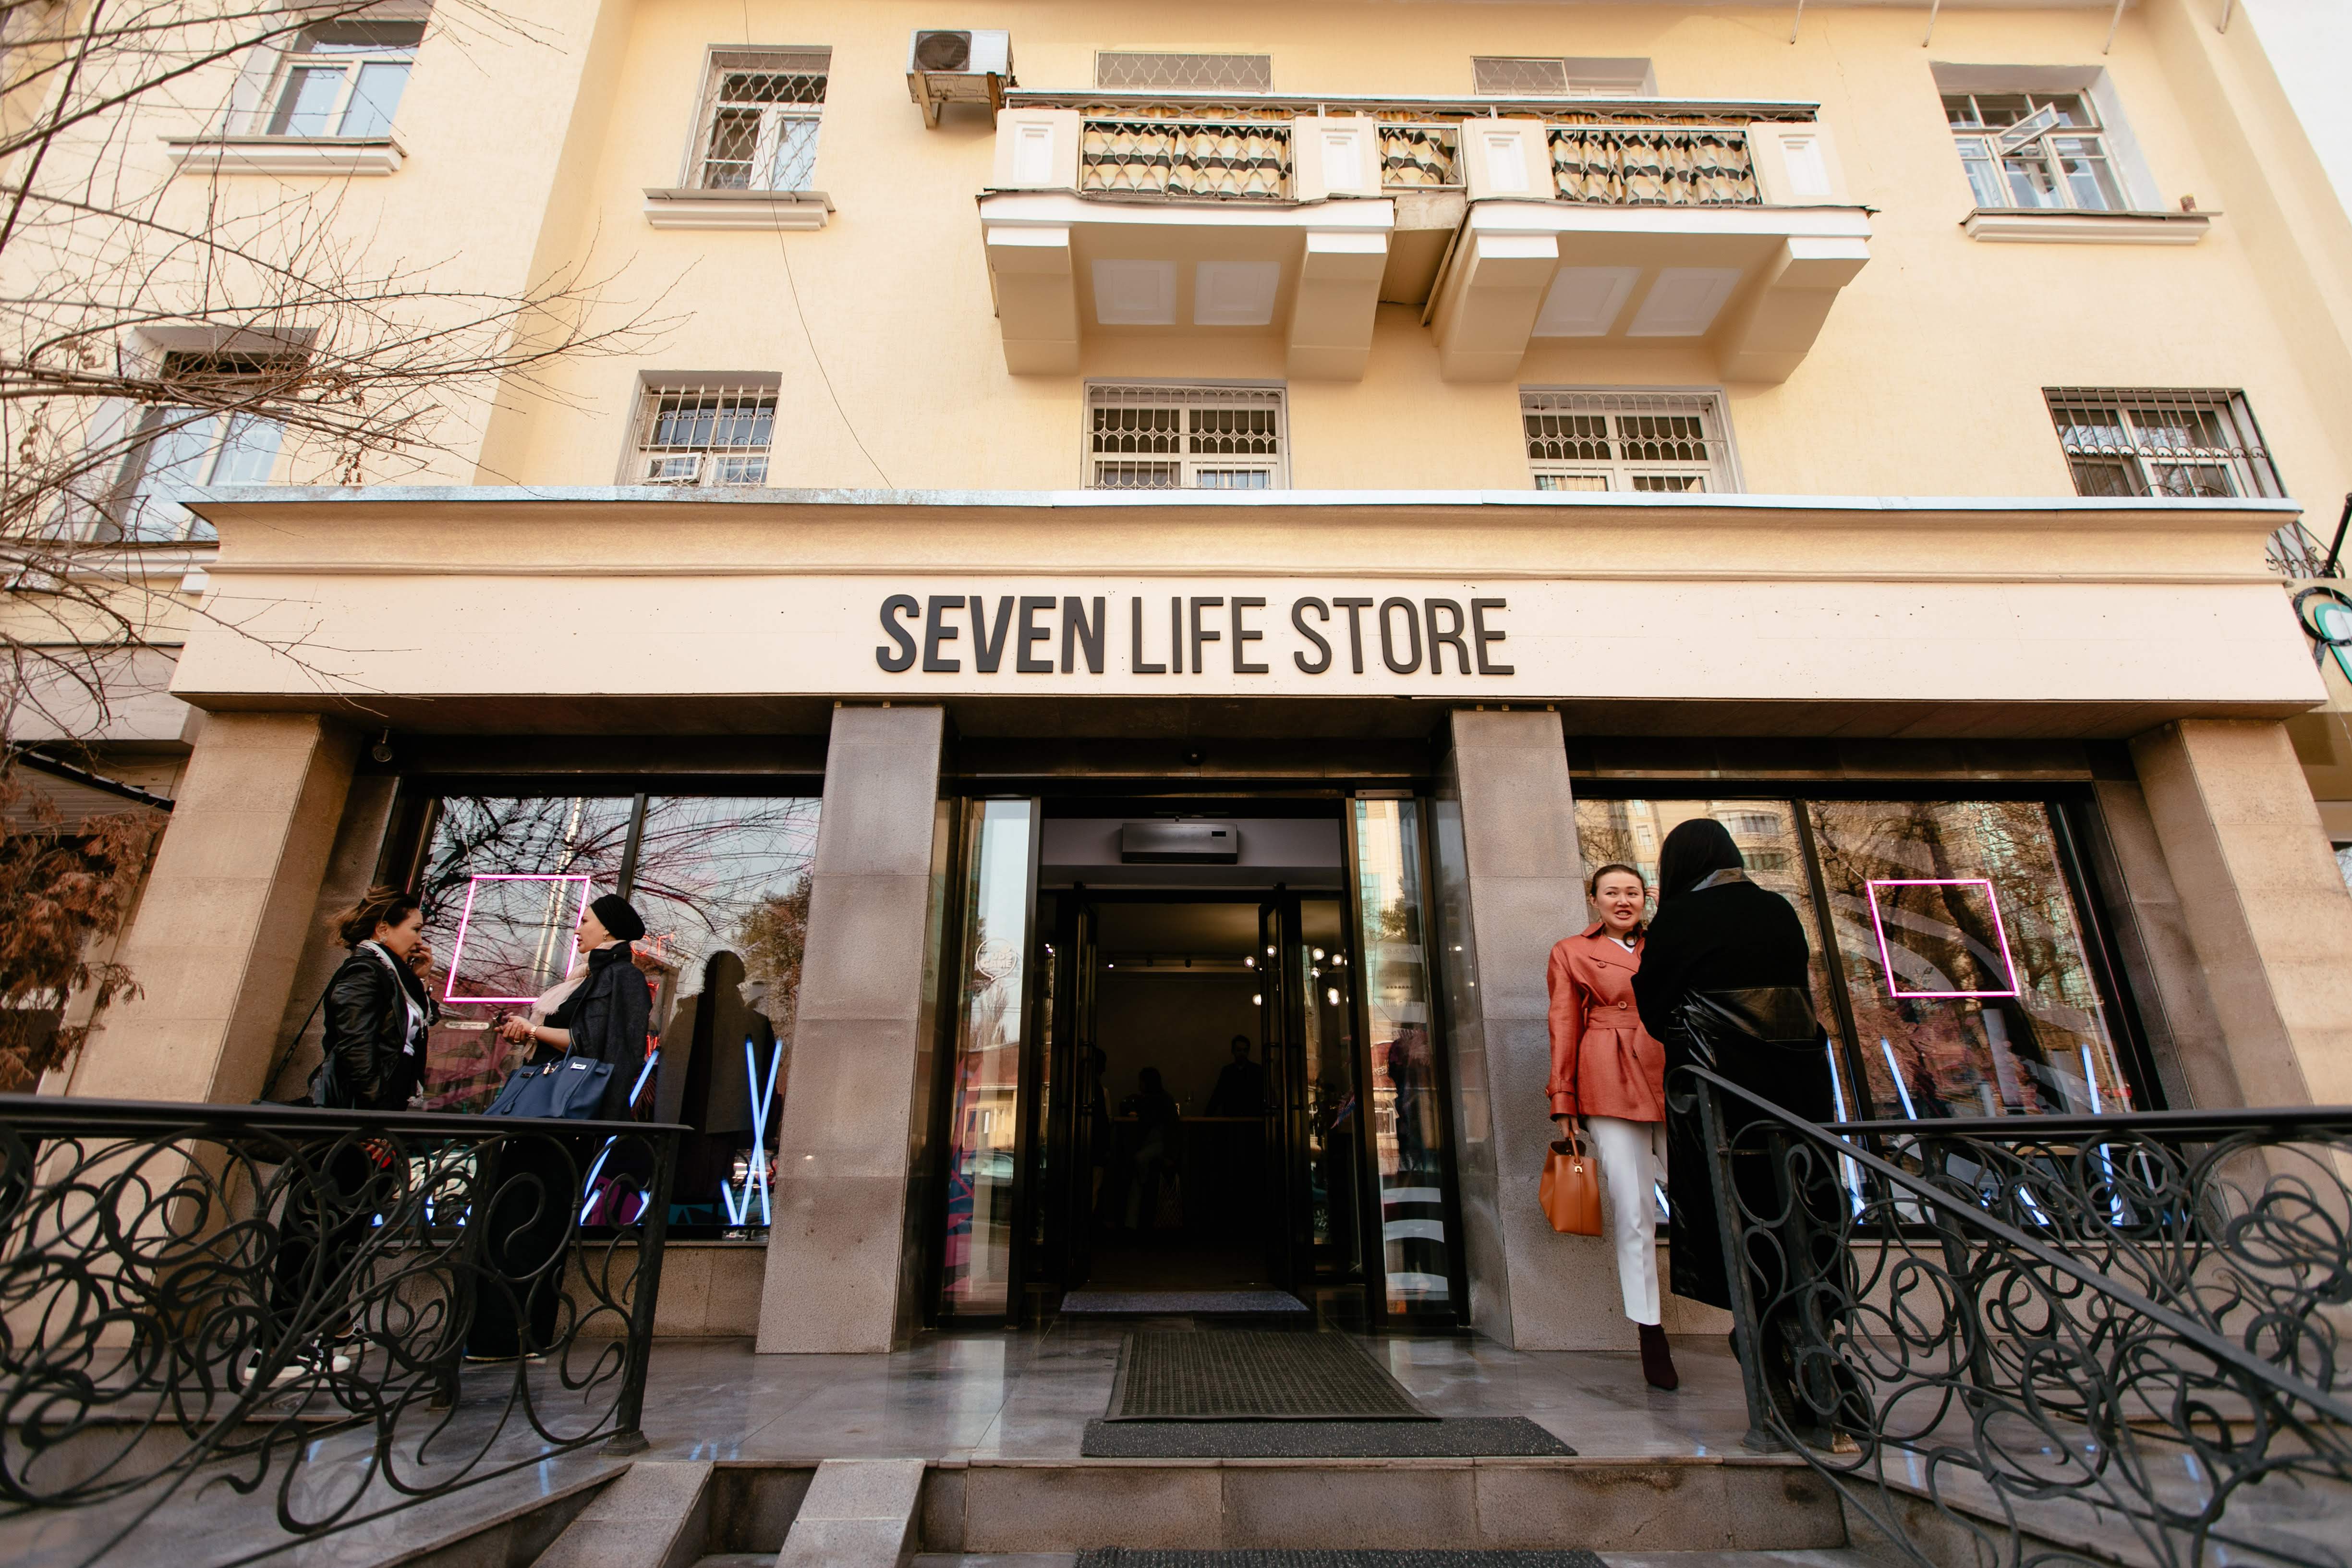 Life is store. Seven магазин. Seven Life Store Астана. Sonlife магазин. Магазин Life Луганск.